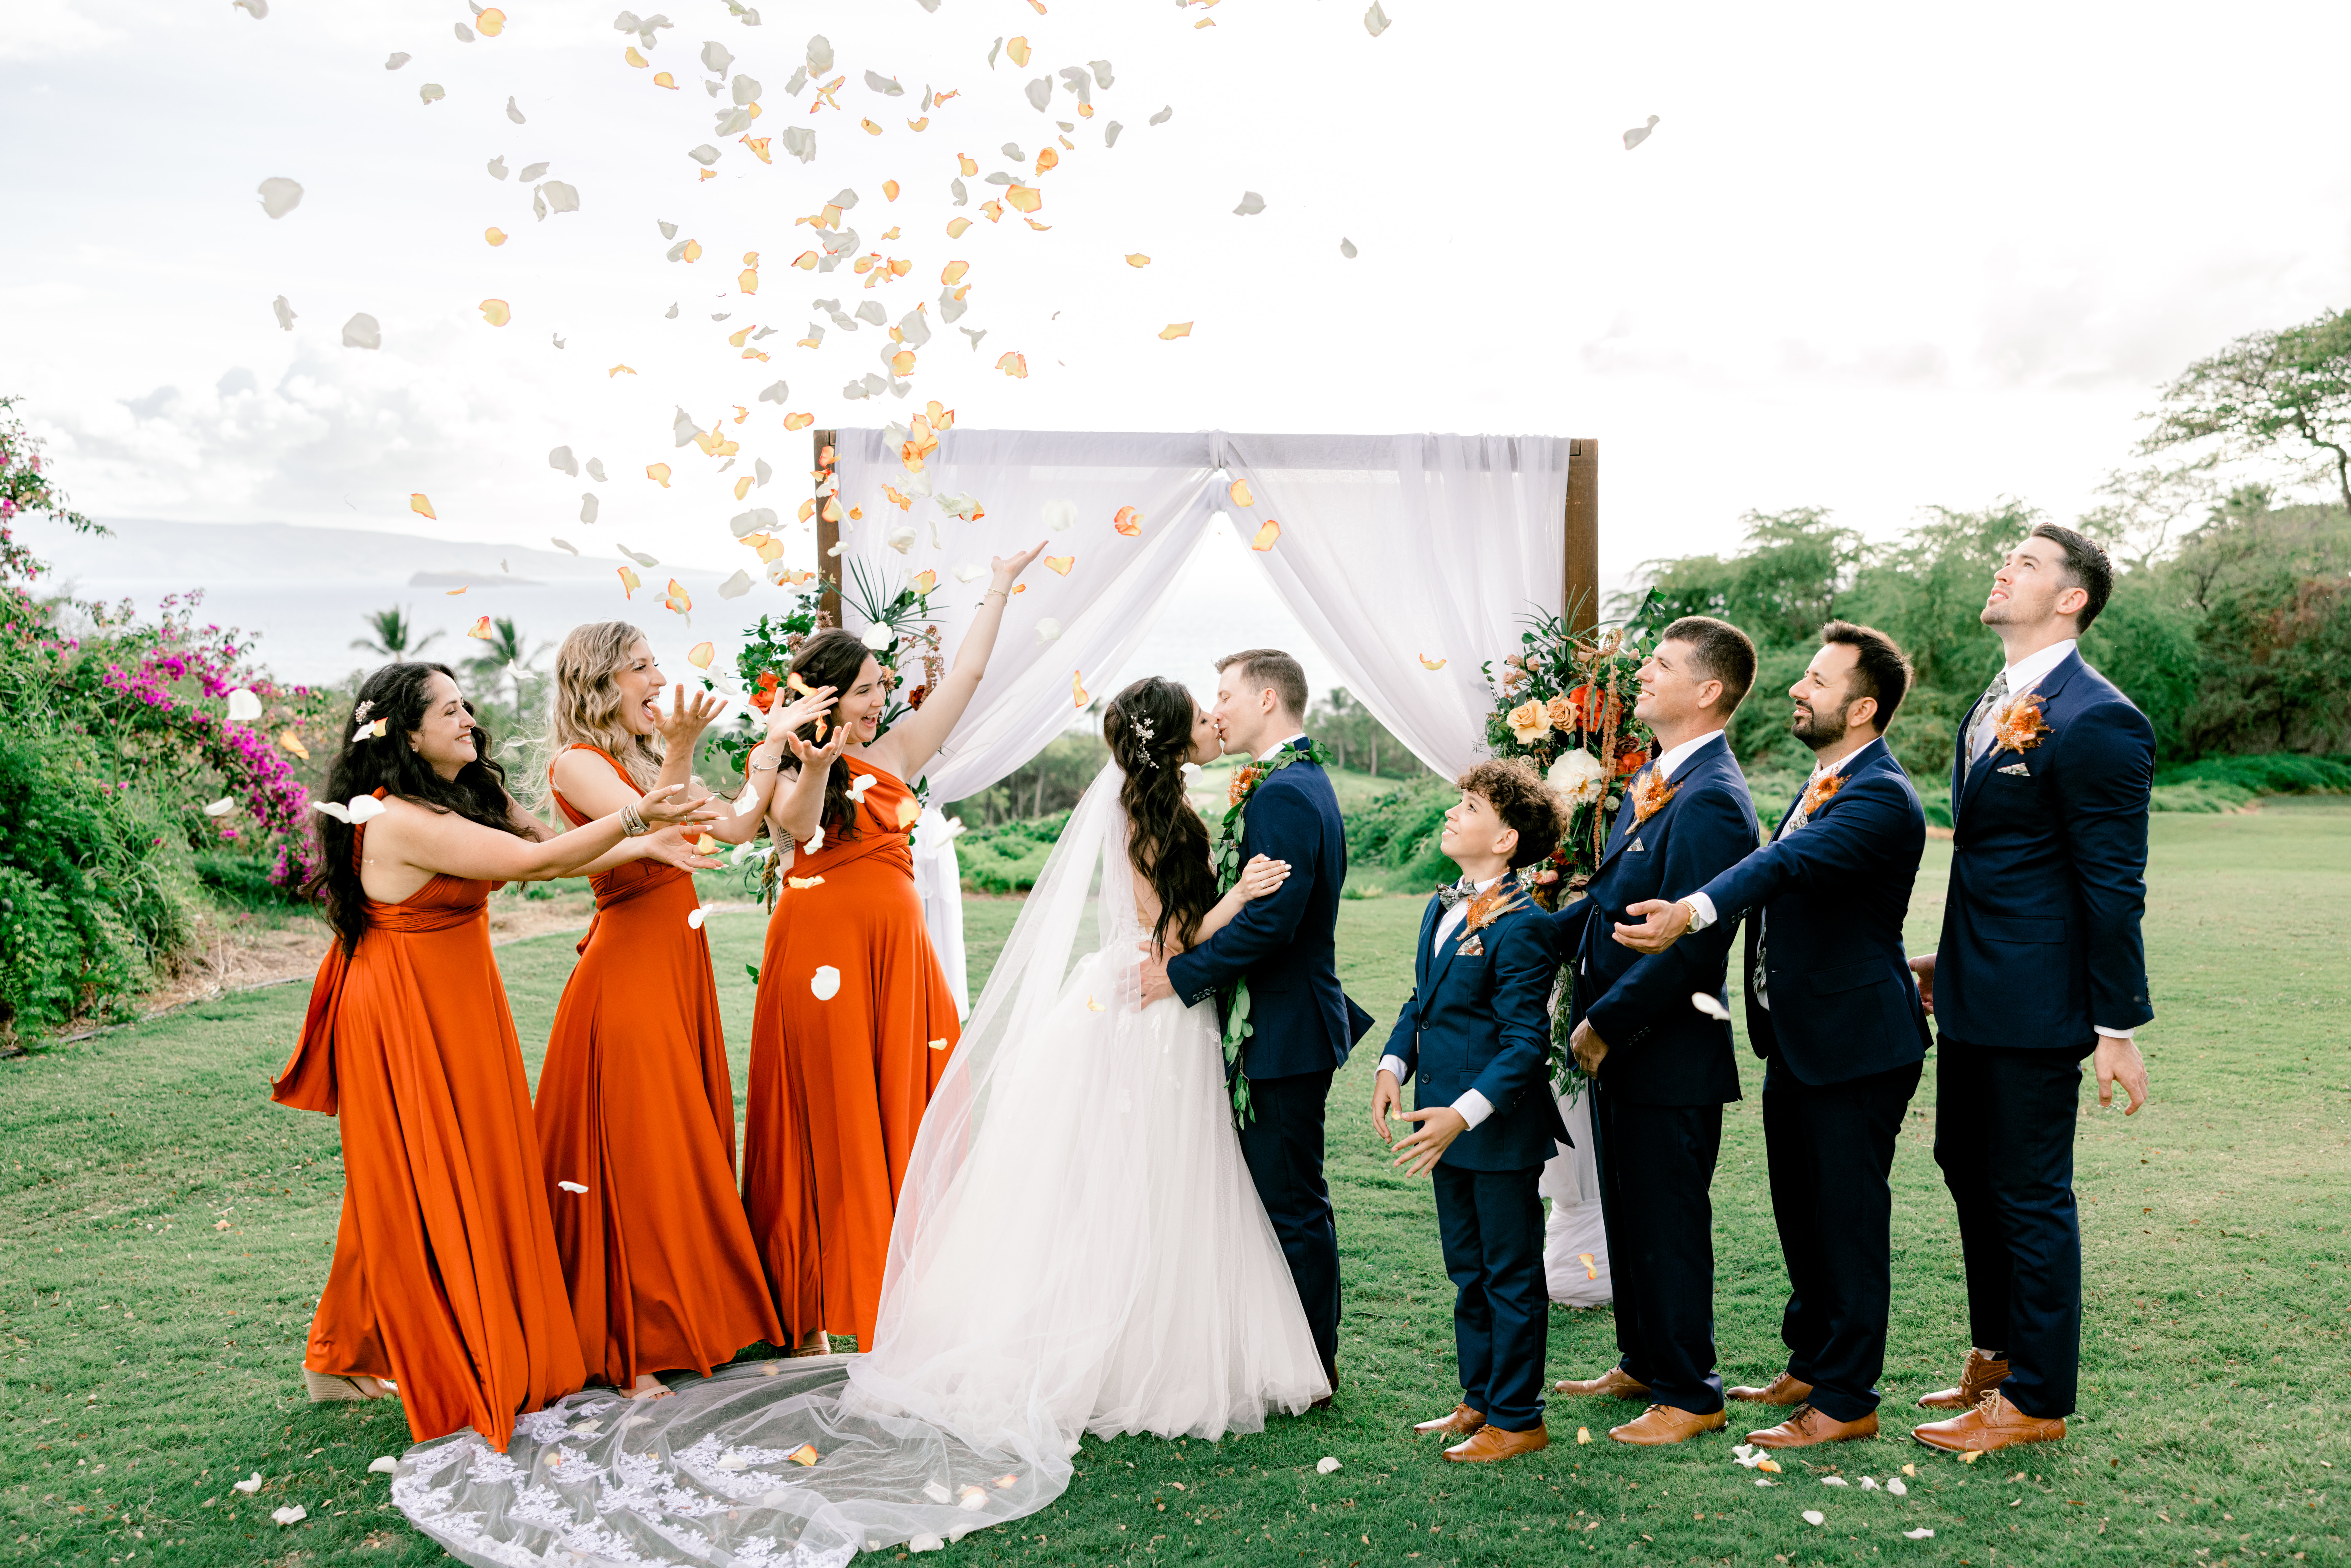 Women wearing wedding dress kissing man wearing suit while bridesmaid wearing orange dresses and men wearing suits throw flowers in the air